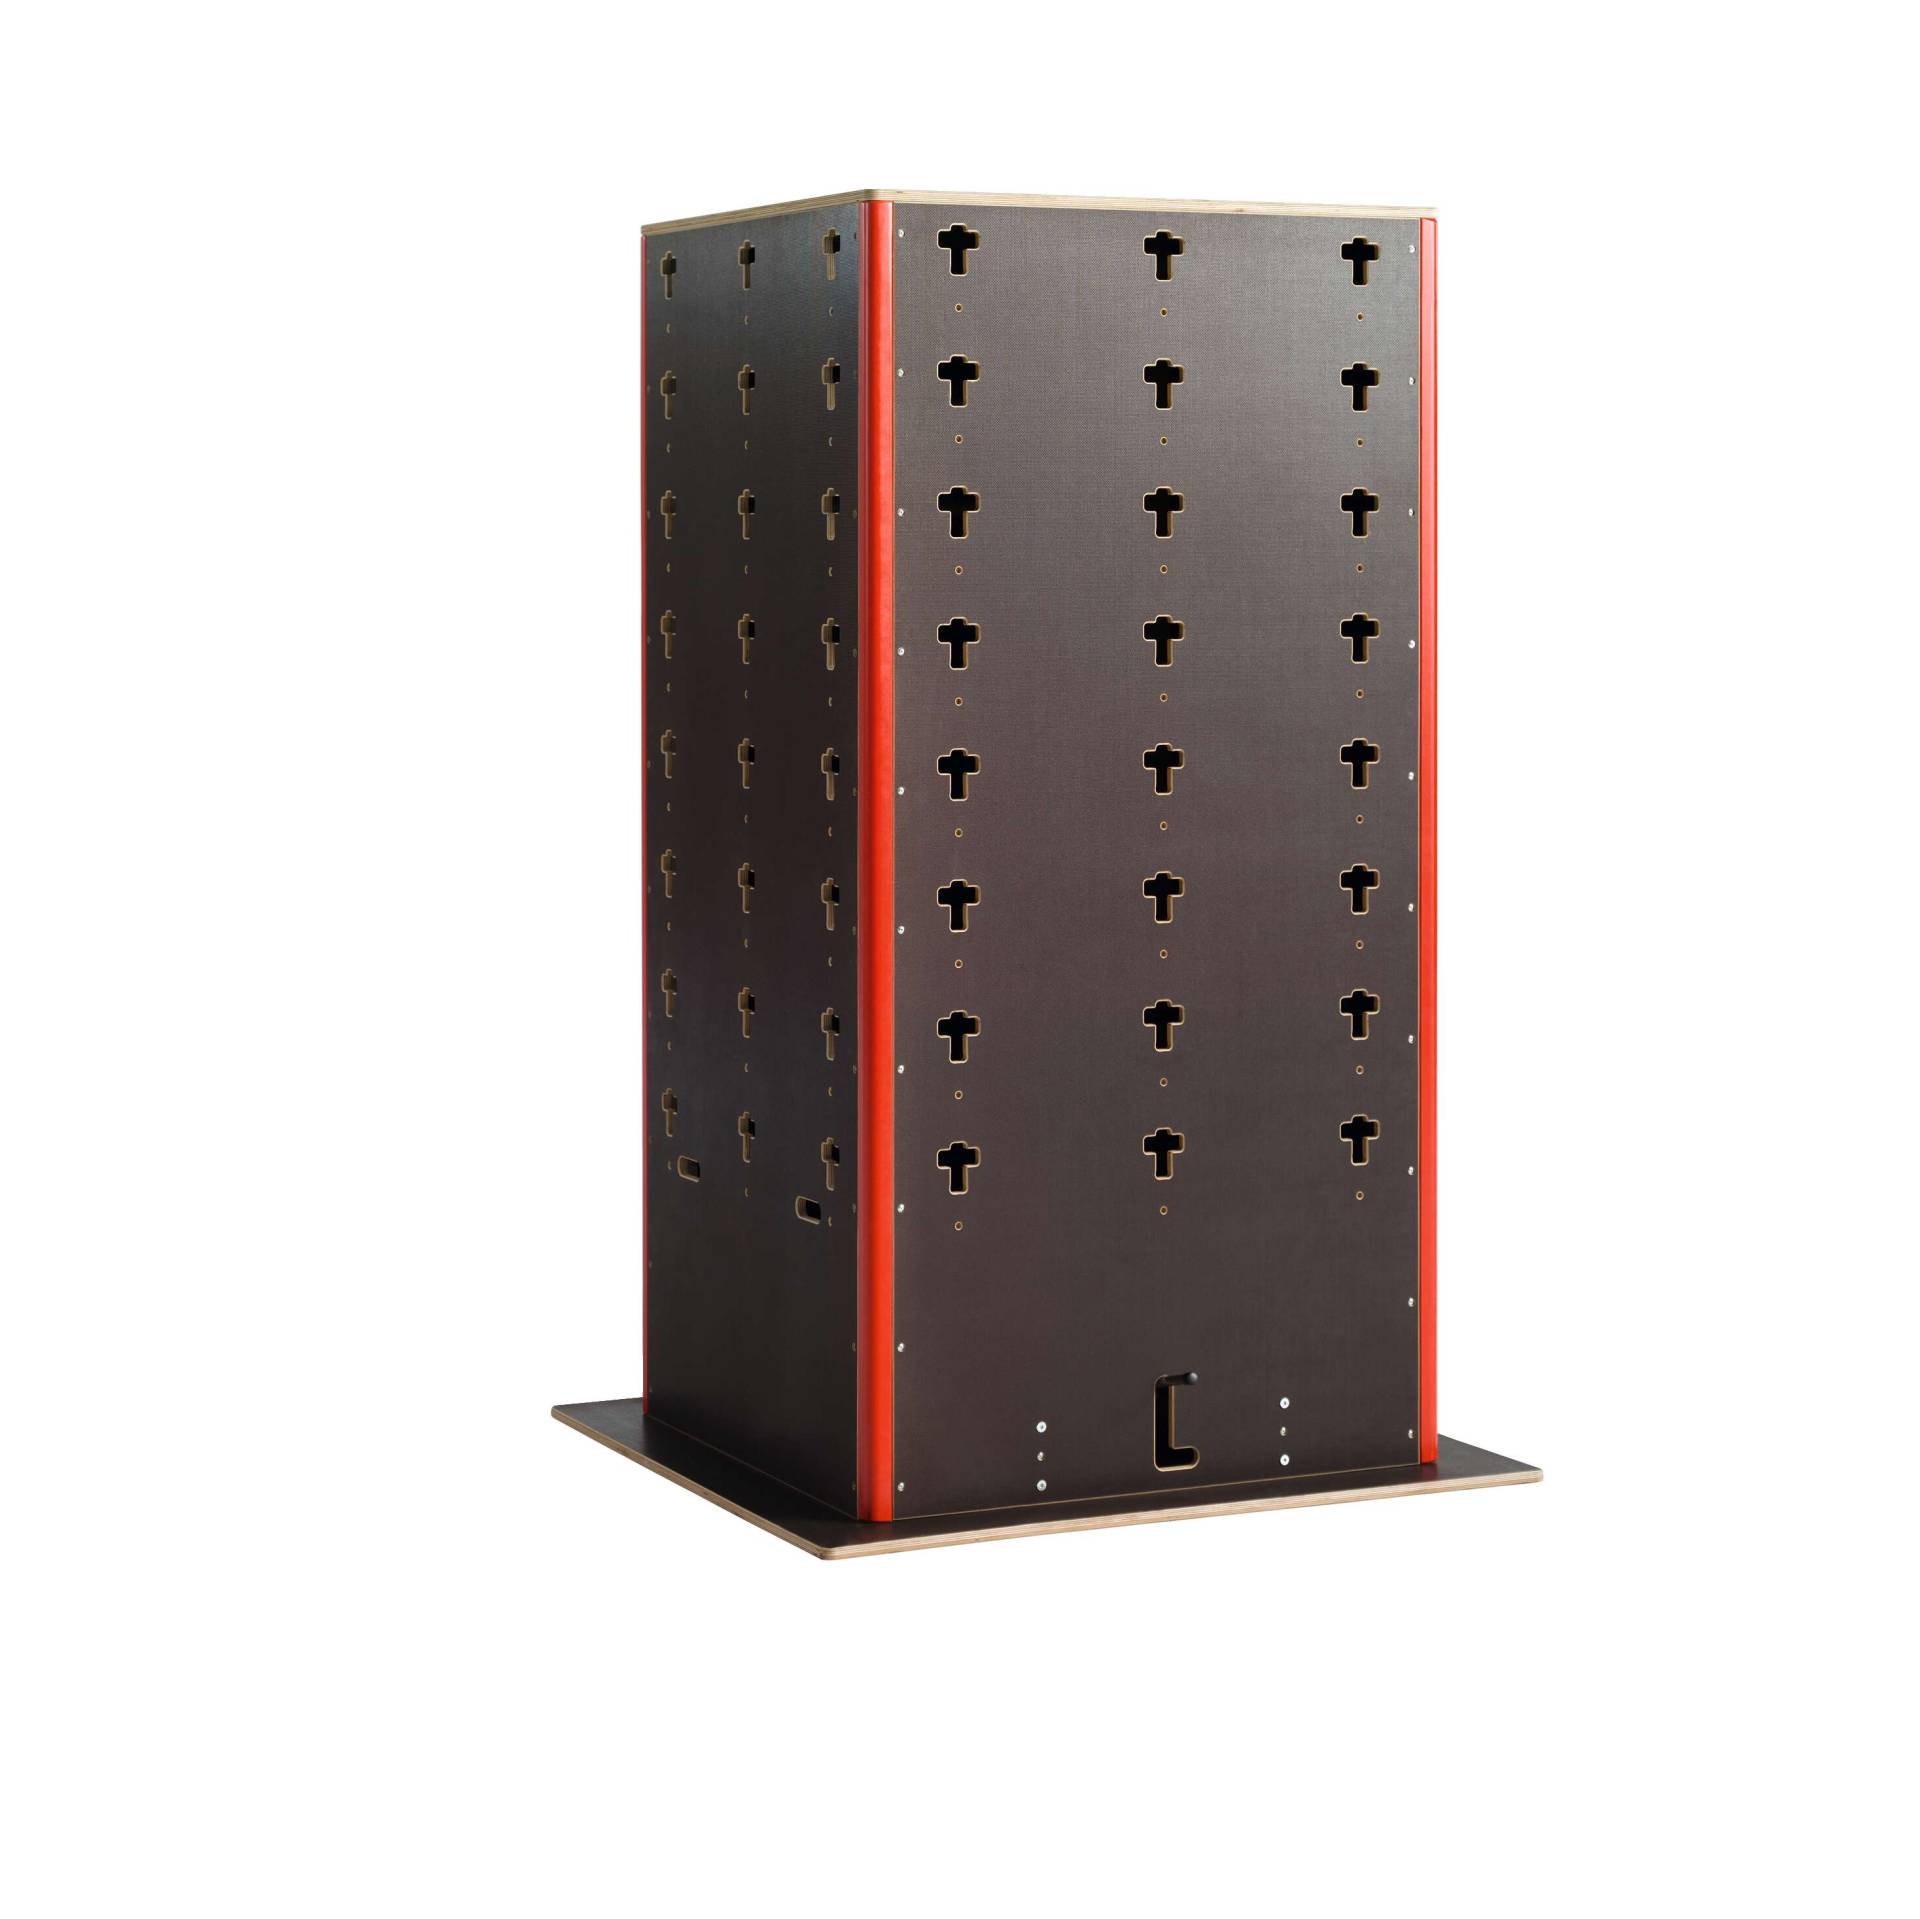 Cube Sports Parkour-Einzelelement "Cube", 125x125x250 cm von Cube Sports